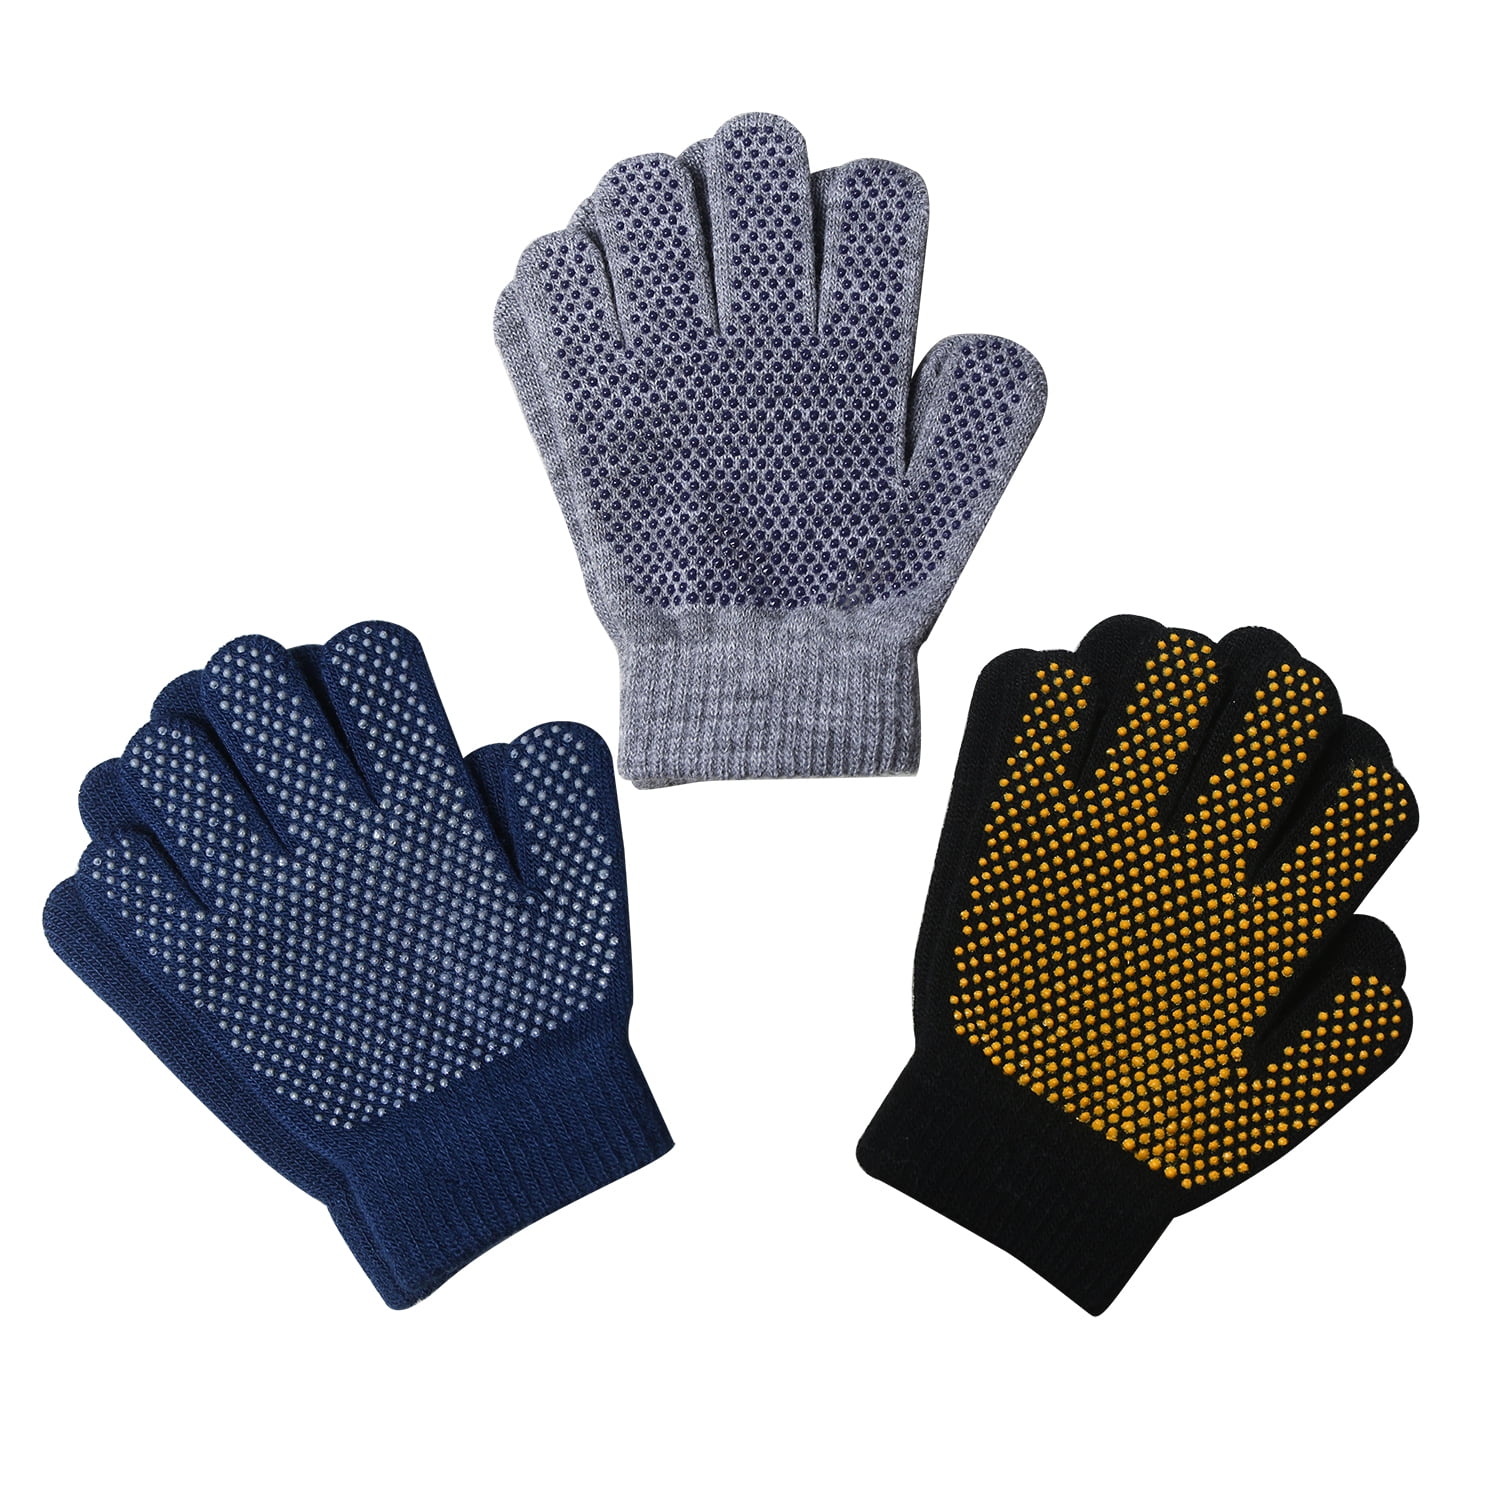 Kids One Size Winter Warm Gloves Children EvridWear Boys Girls Magic Stretch Gripper Gloves 3 Pair Pack Assortment 